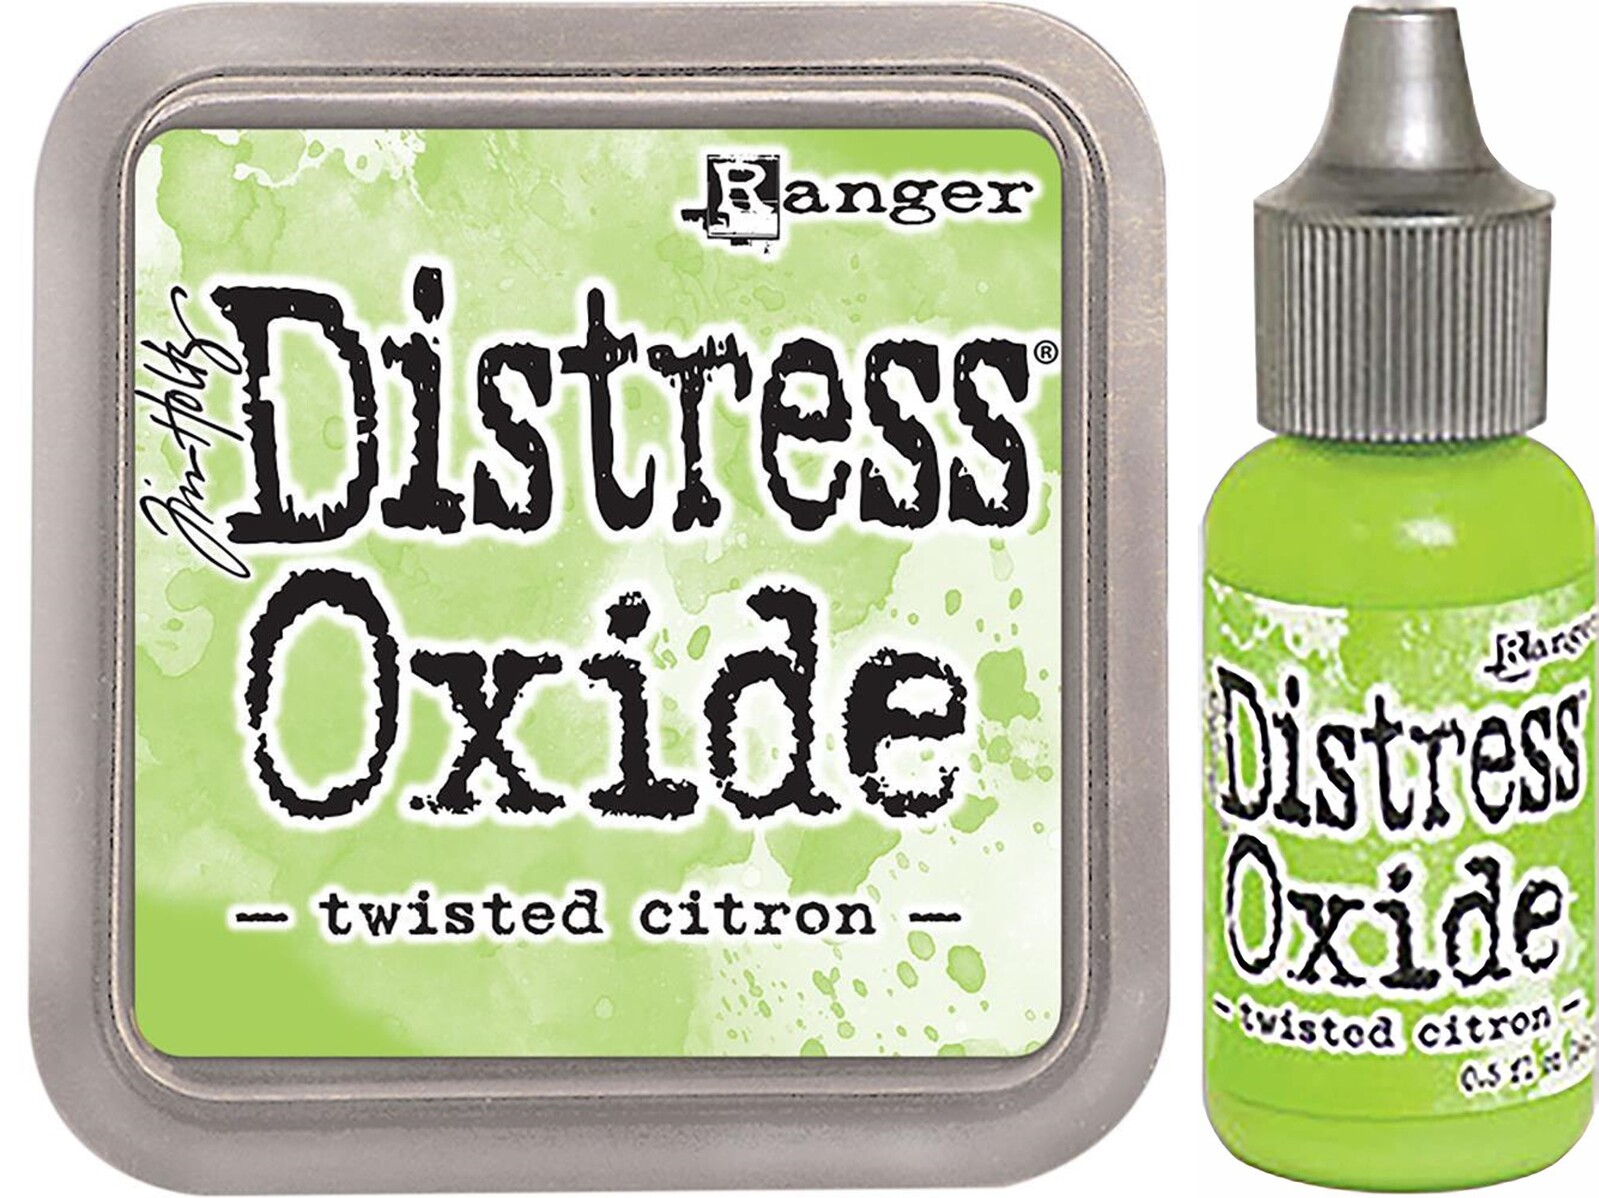 Tim Holtz Distress Oxide Ink Pad + Reinker Twisted Citron